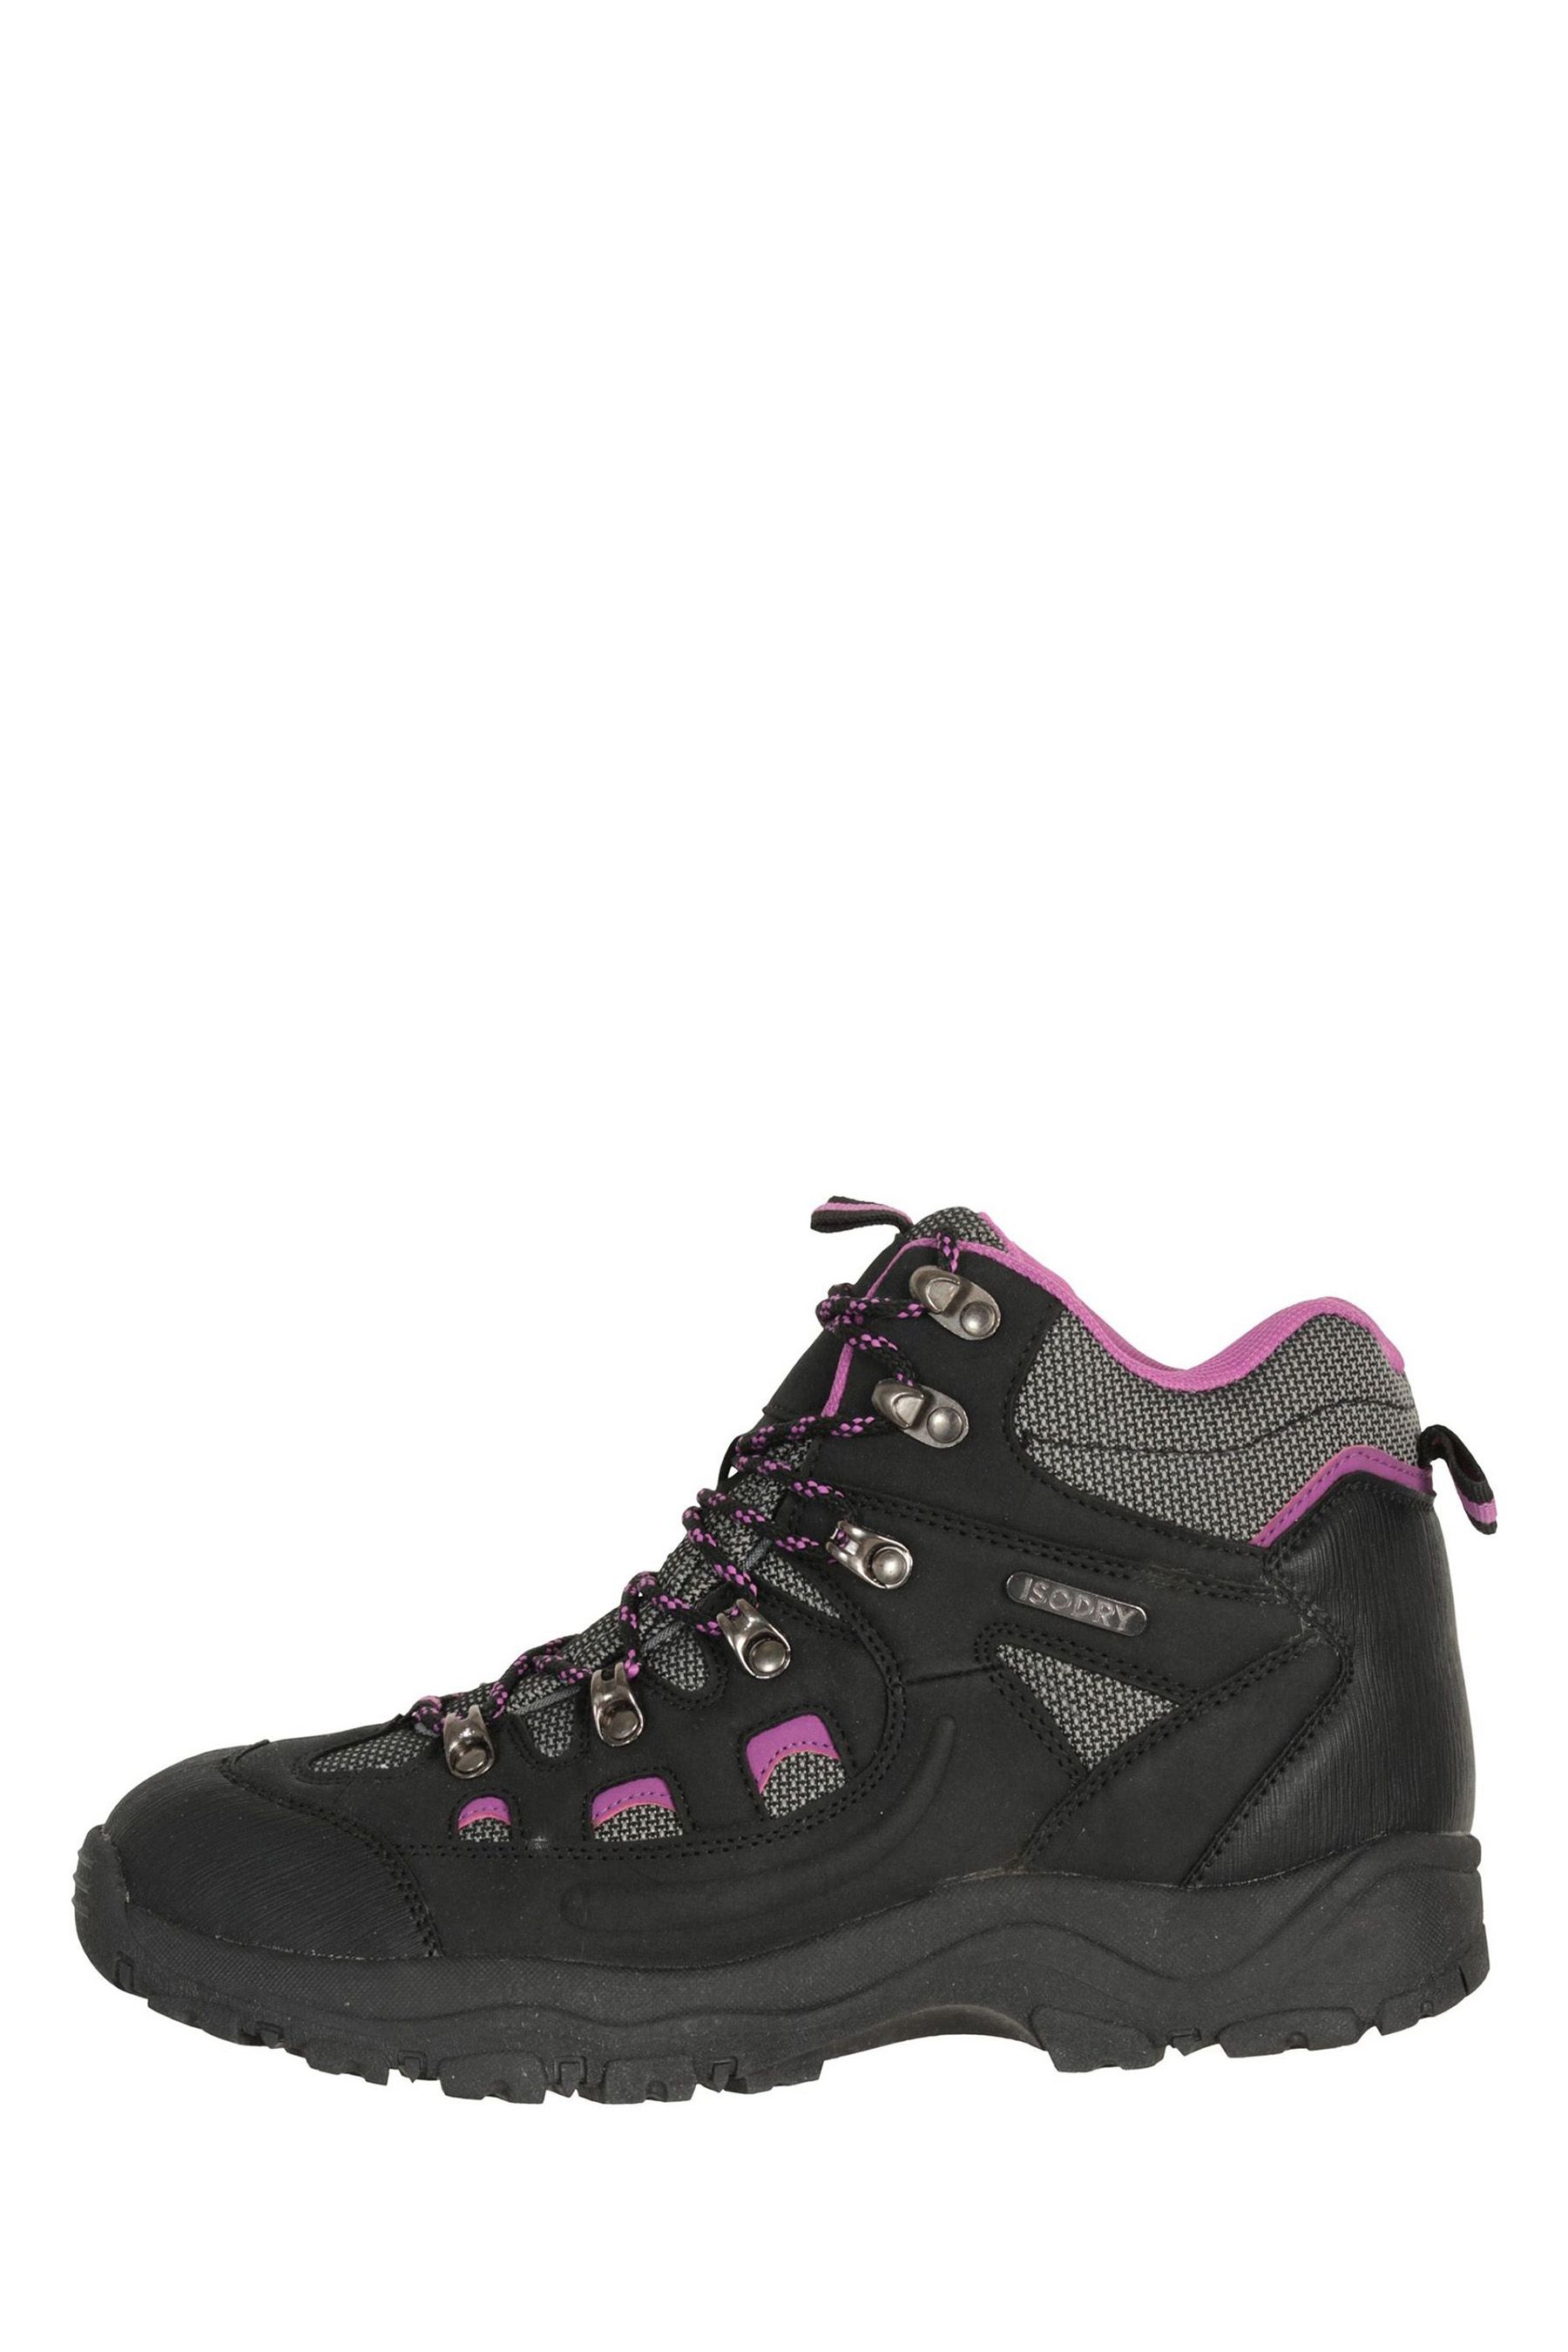 Buy Mountain Warehouse Adventurer Womens Waterproof Walking Boots from ...